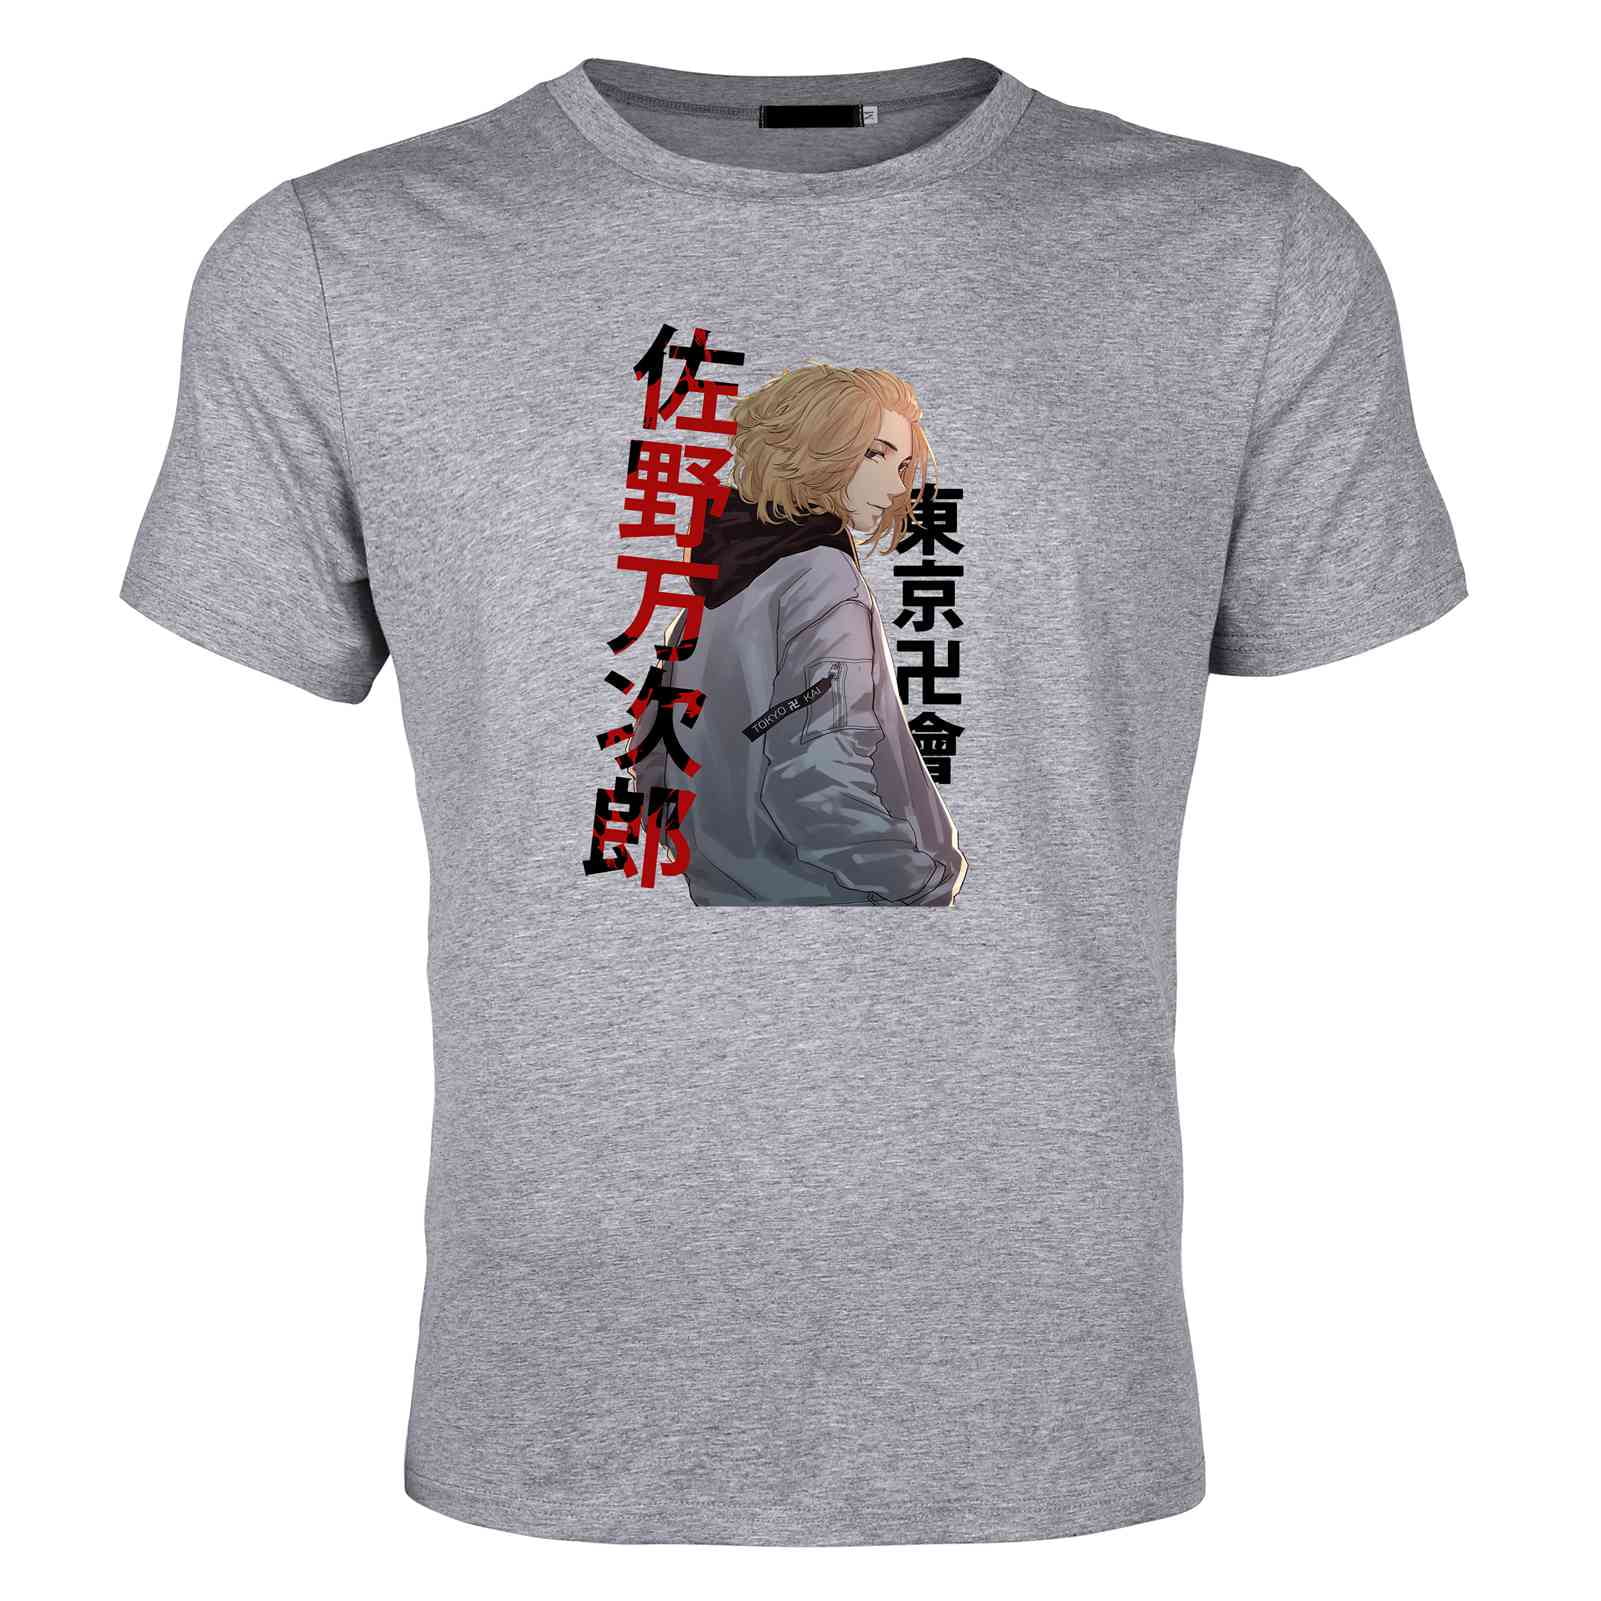 SHIYAO - SHIYAO Anime Tokyo Revengers T-shirt for Men, Summer Crew Neck T- shirt, Athletic Running Gym Short Sleeve Tee Tops, Breathable - Walmart.com - Walmart.com